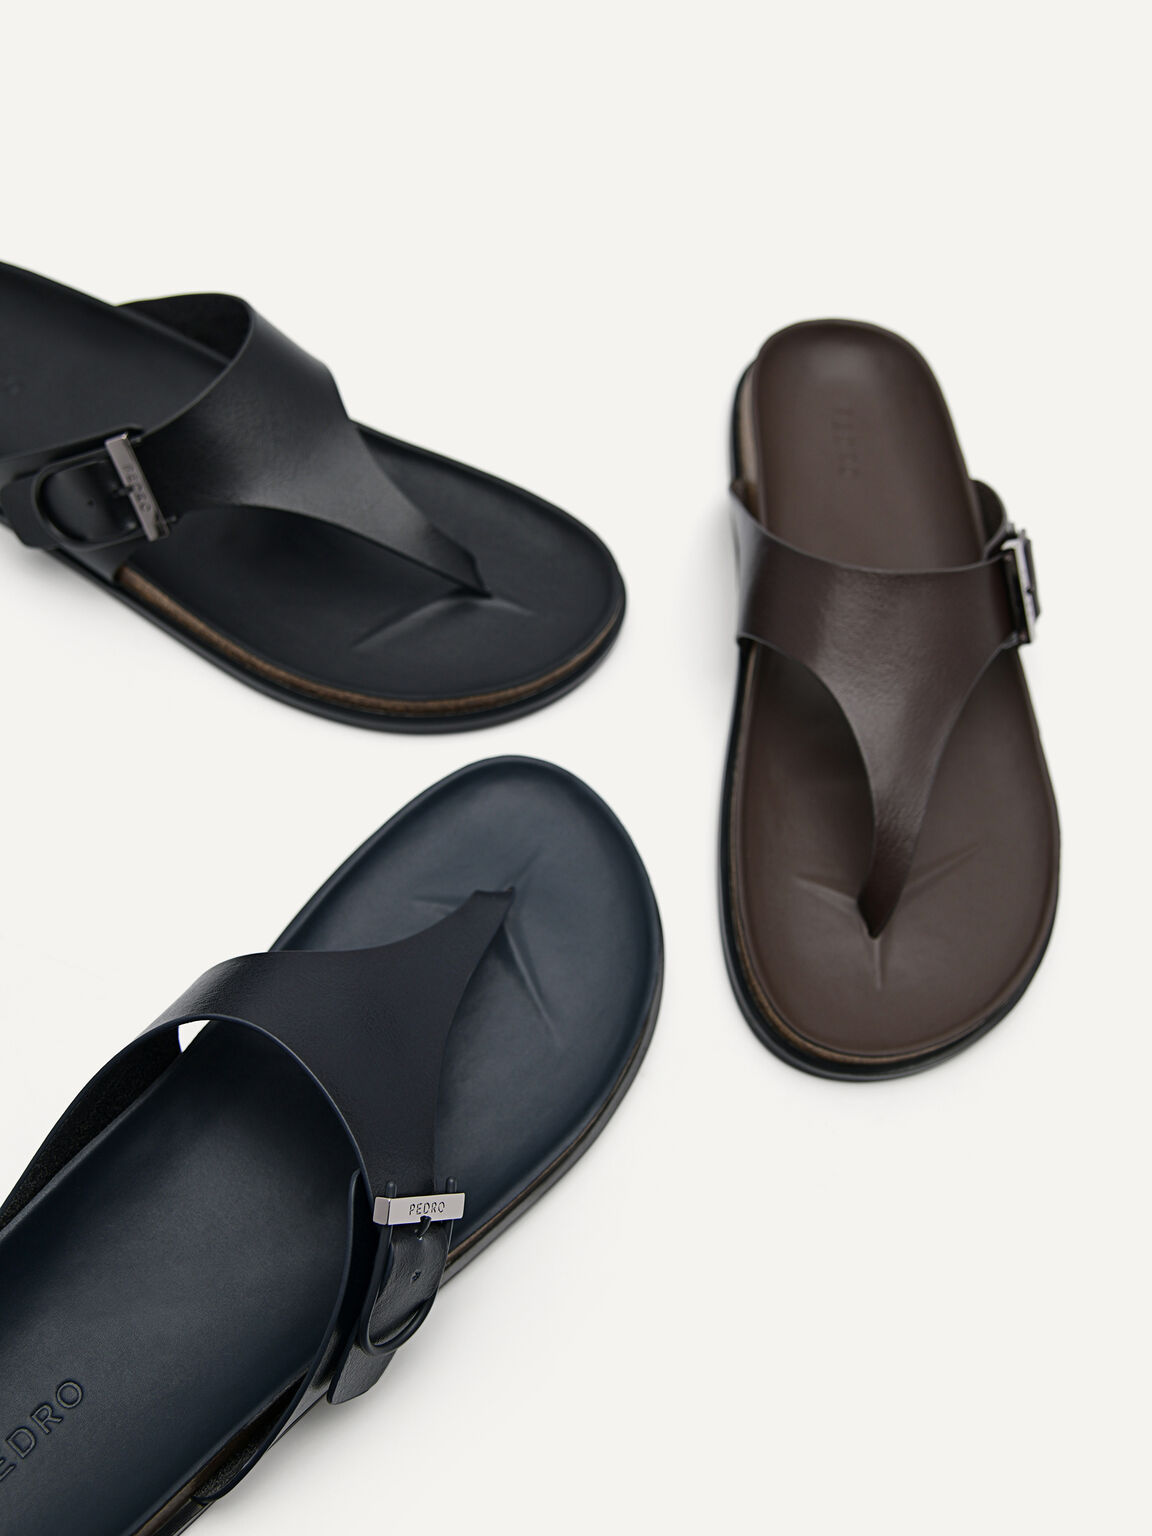 Thong Sandals, Black